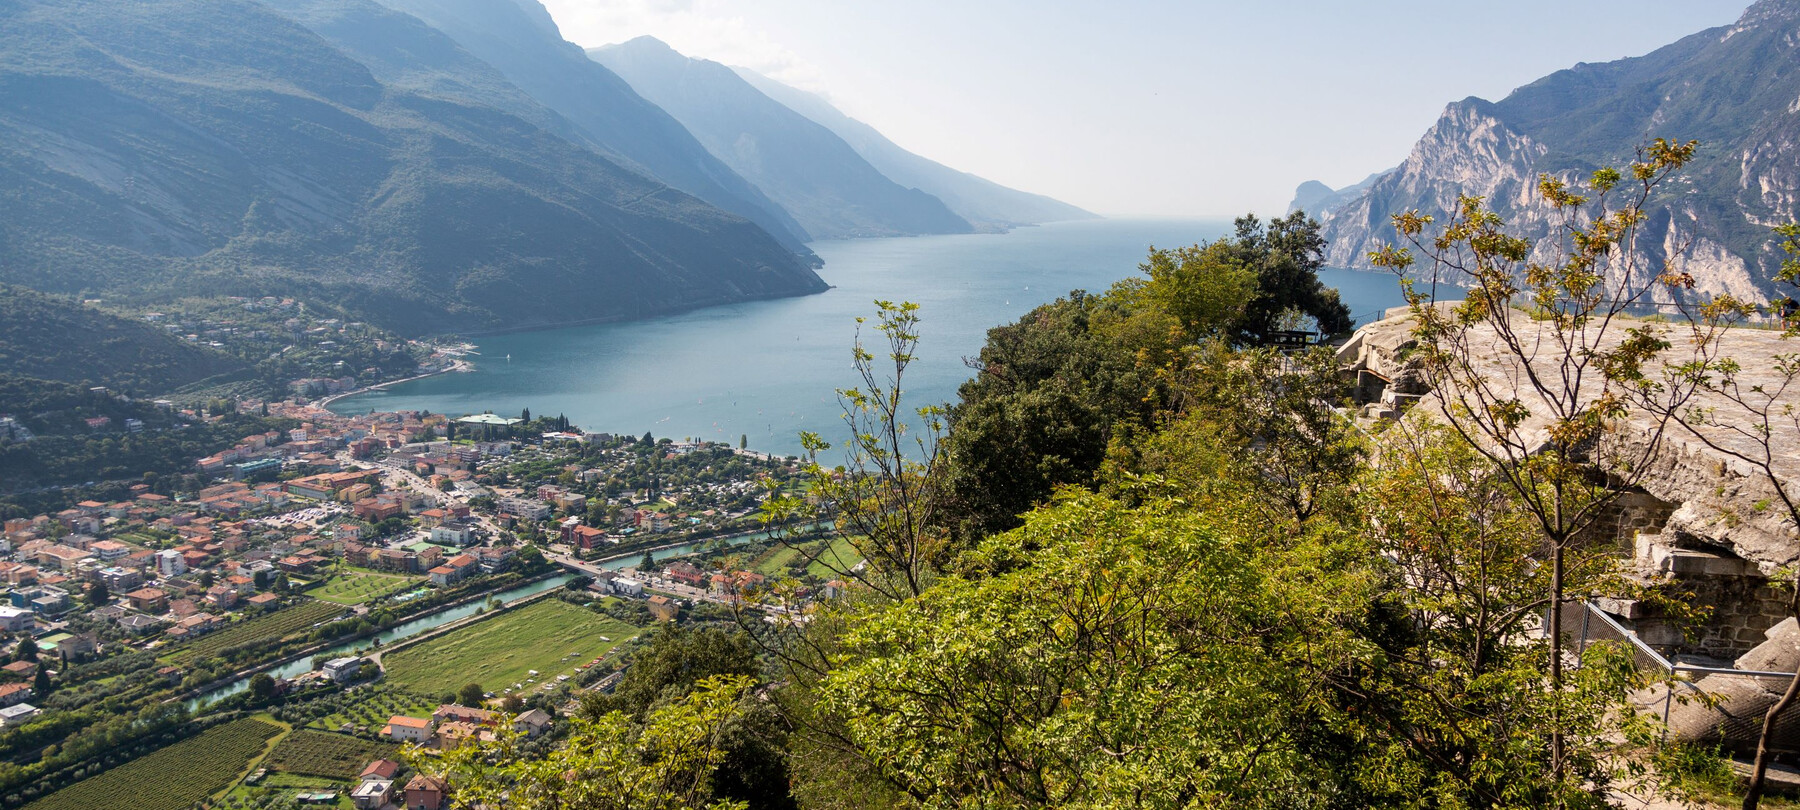 Friedensweg Trentino: 3. Abschnitt | Valle di Ledro und Alto Garda